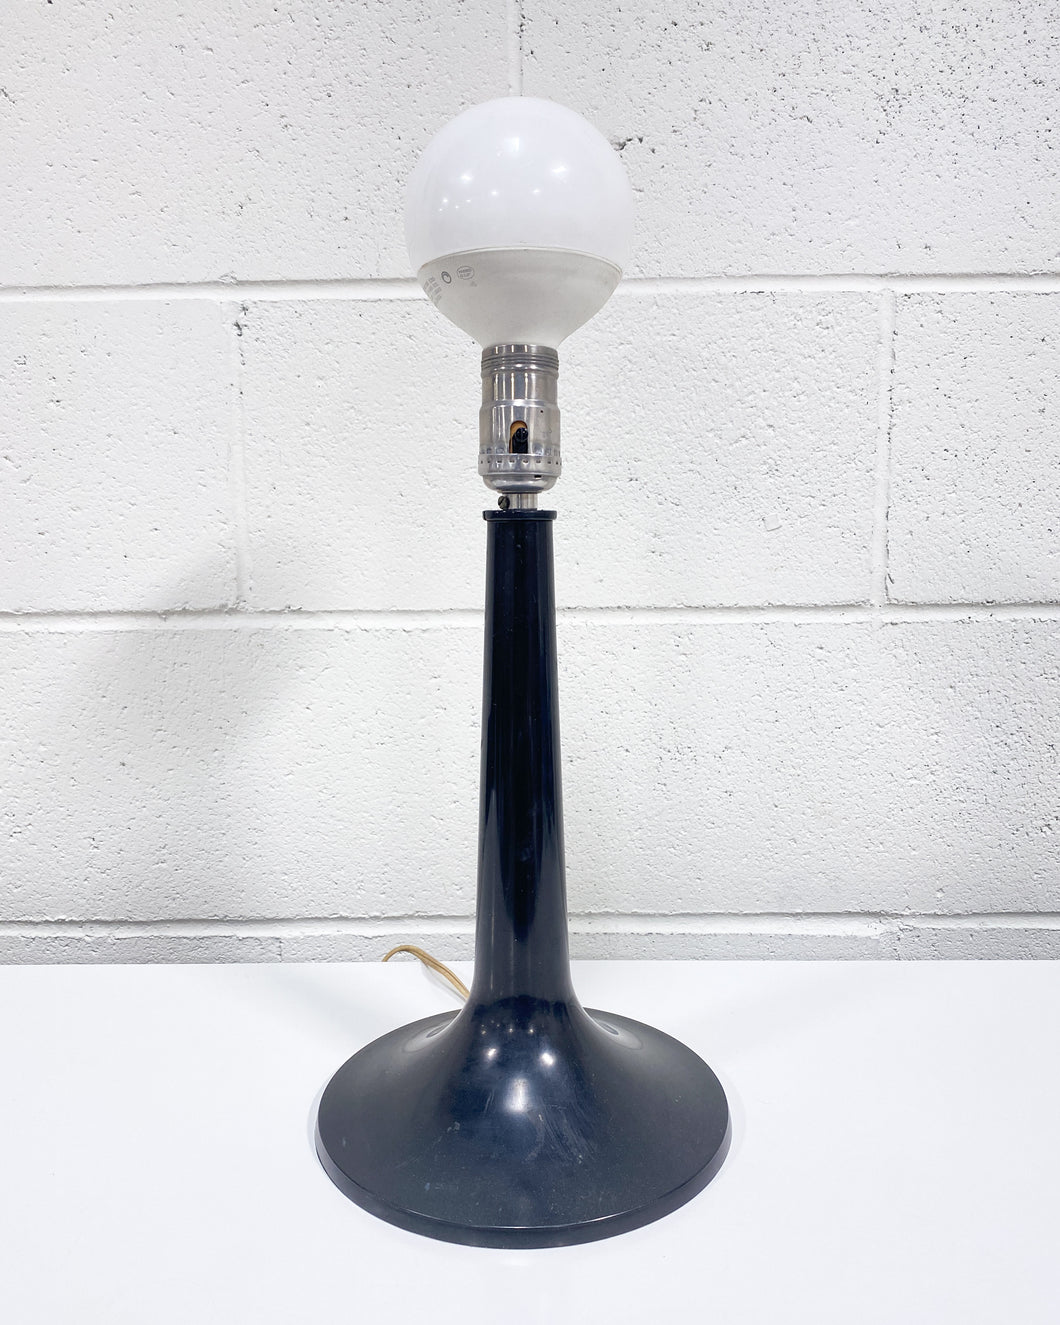 Vintage Black Table Lamp - As Found